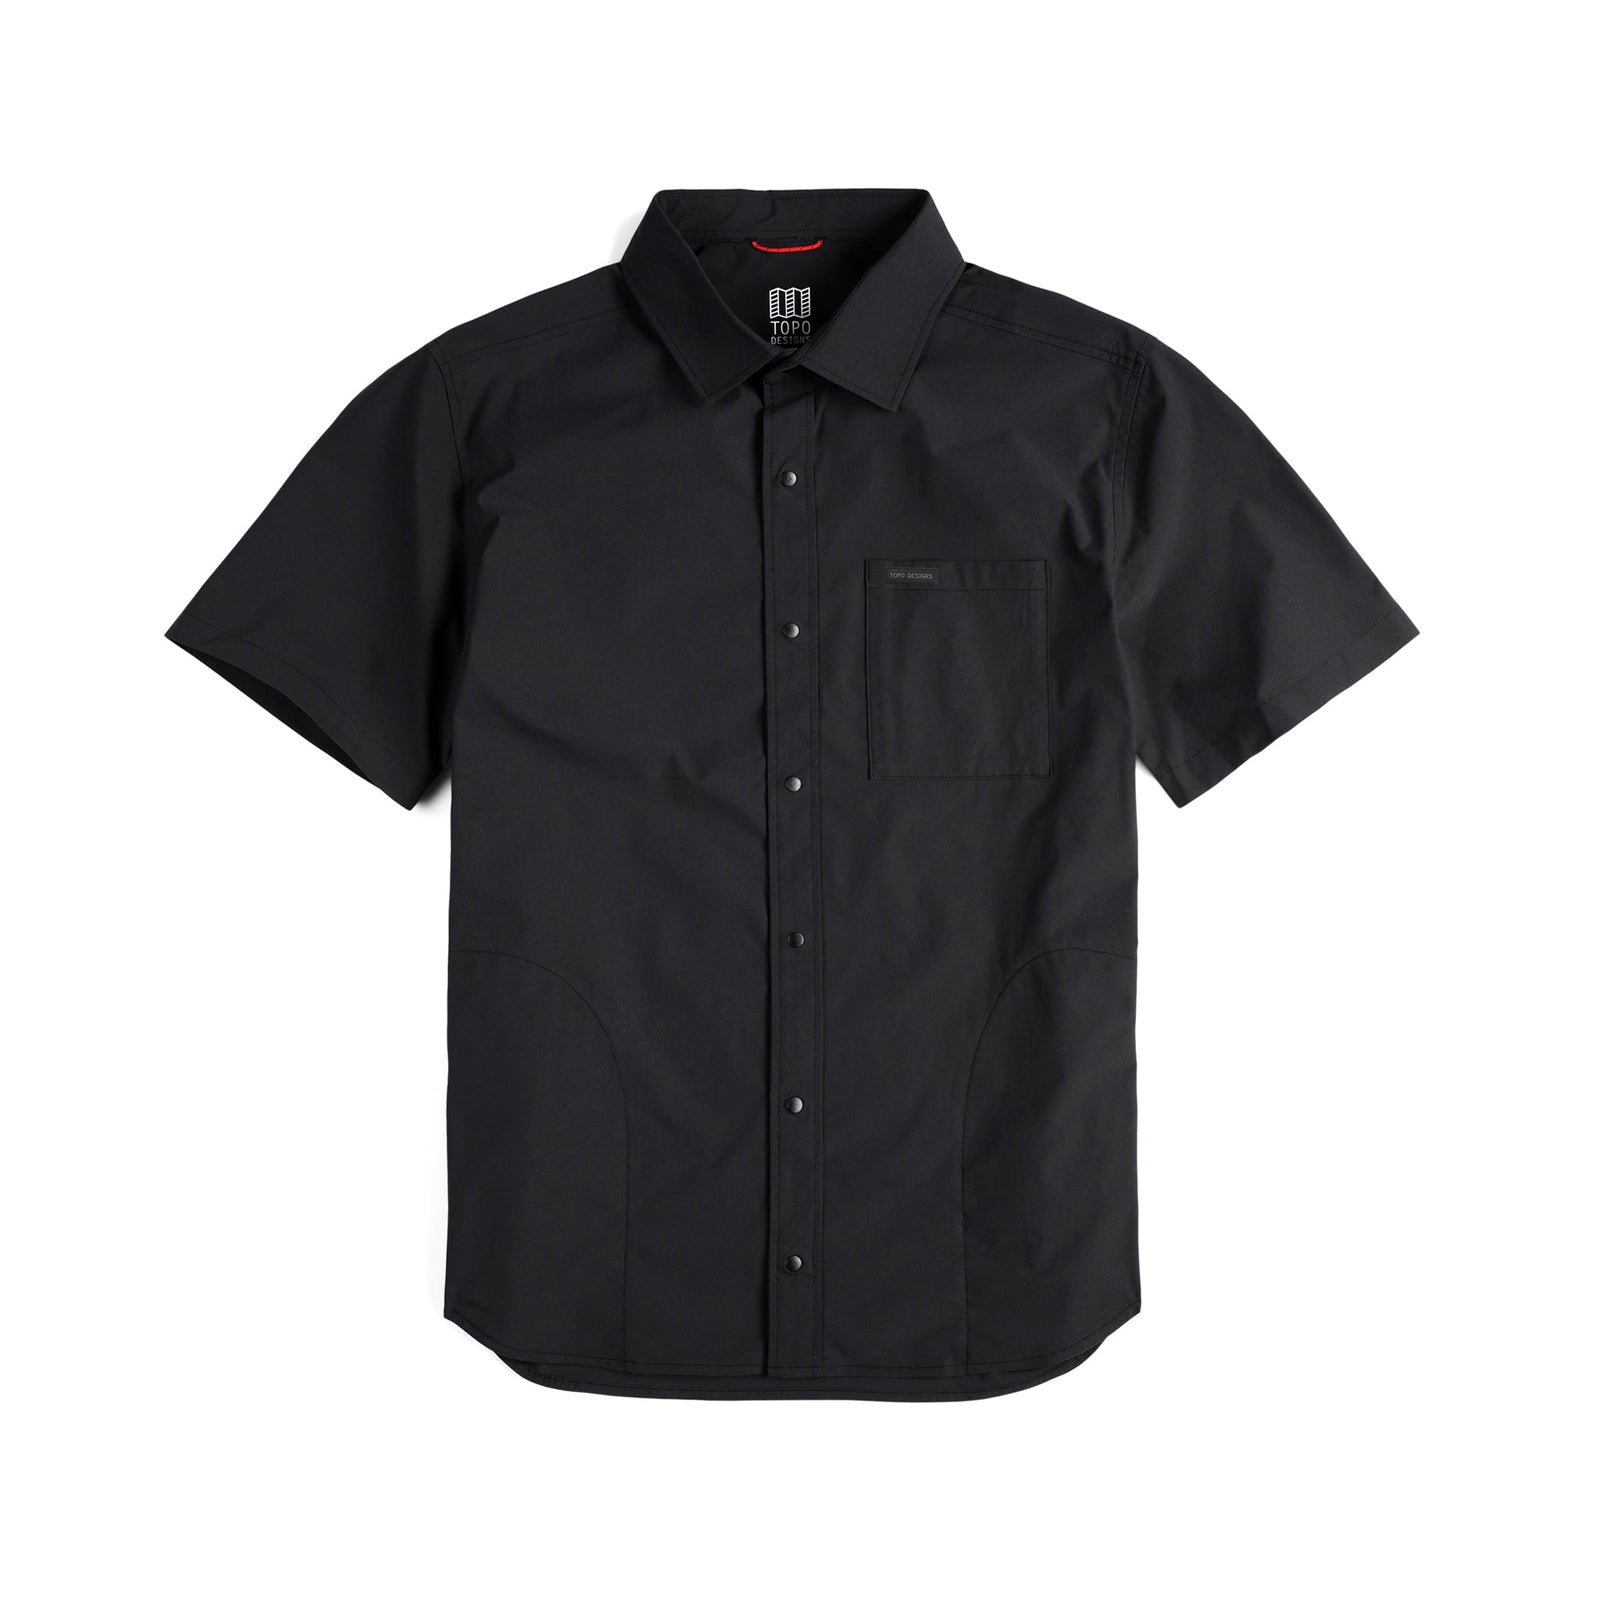 Topo Designs Men's Global Shirt Short Sleeve 30+ UPF rated travel shirt in "Black".